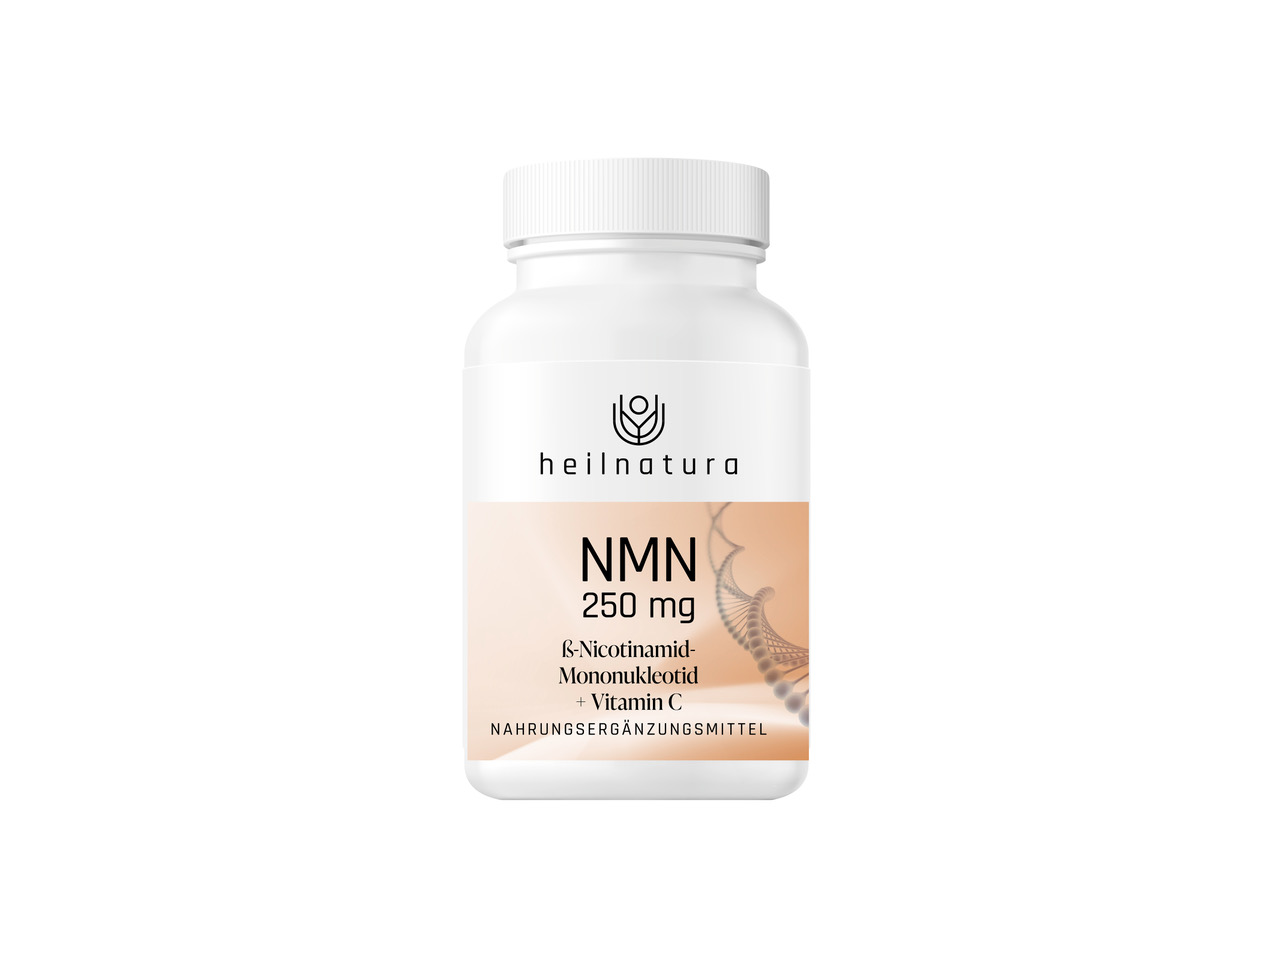 NMN capsules 250 mg + C